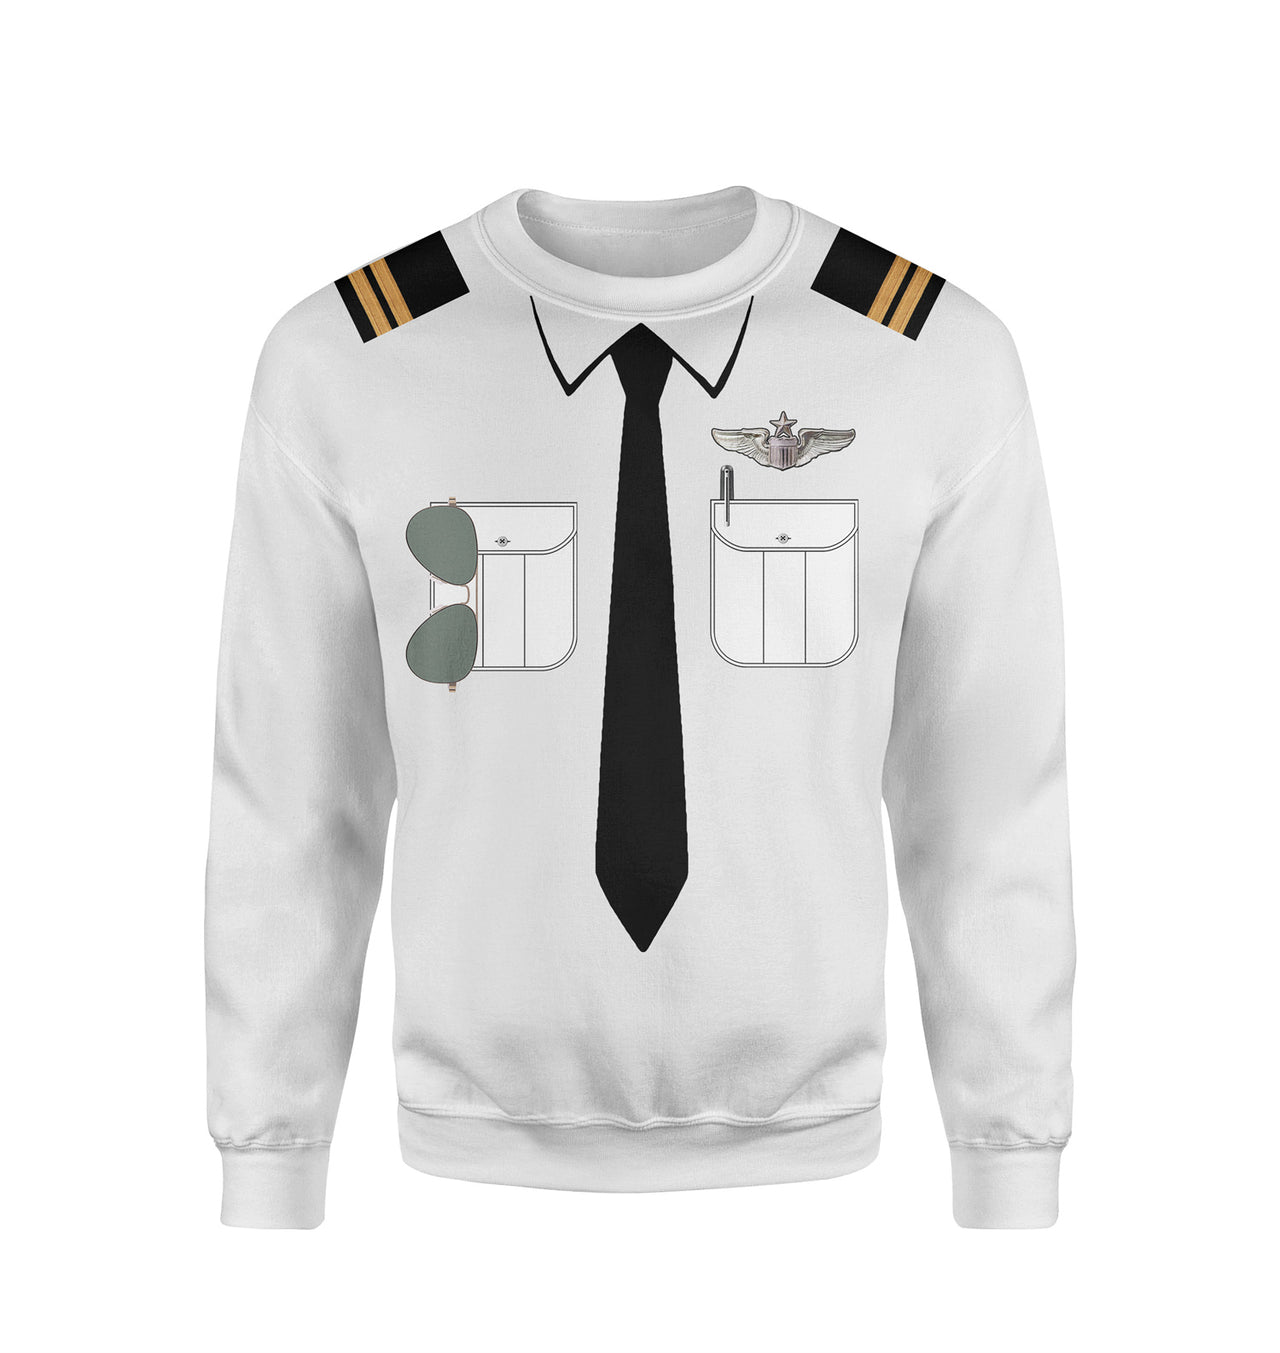 Customizable Pilot Uniform (US Air Force & Star) Designed 3D Sweatshirts